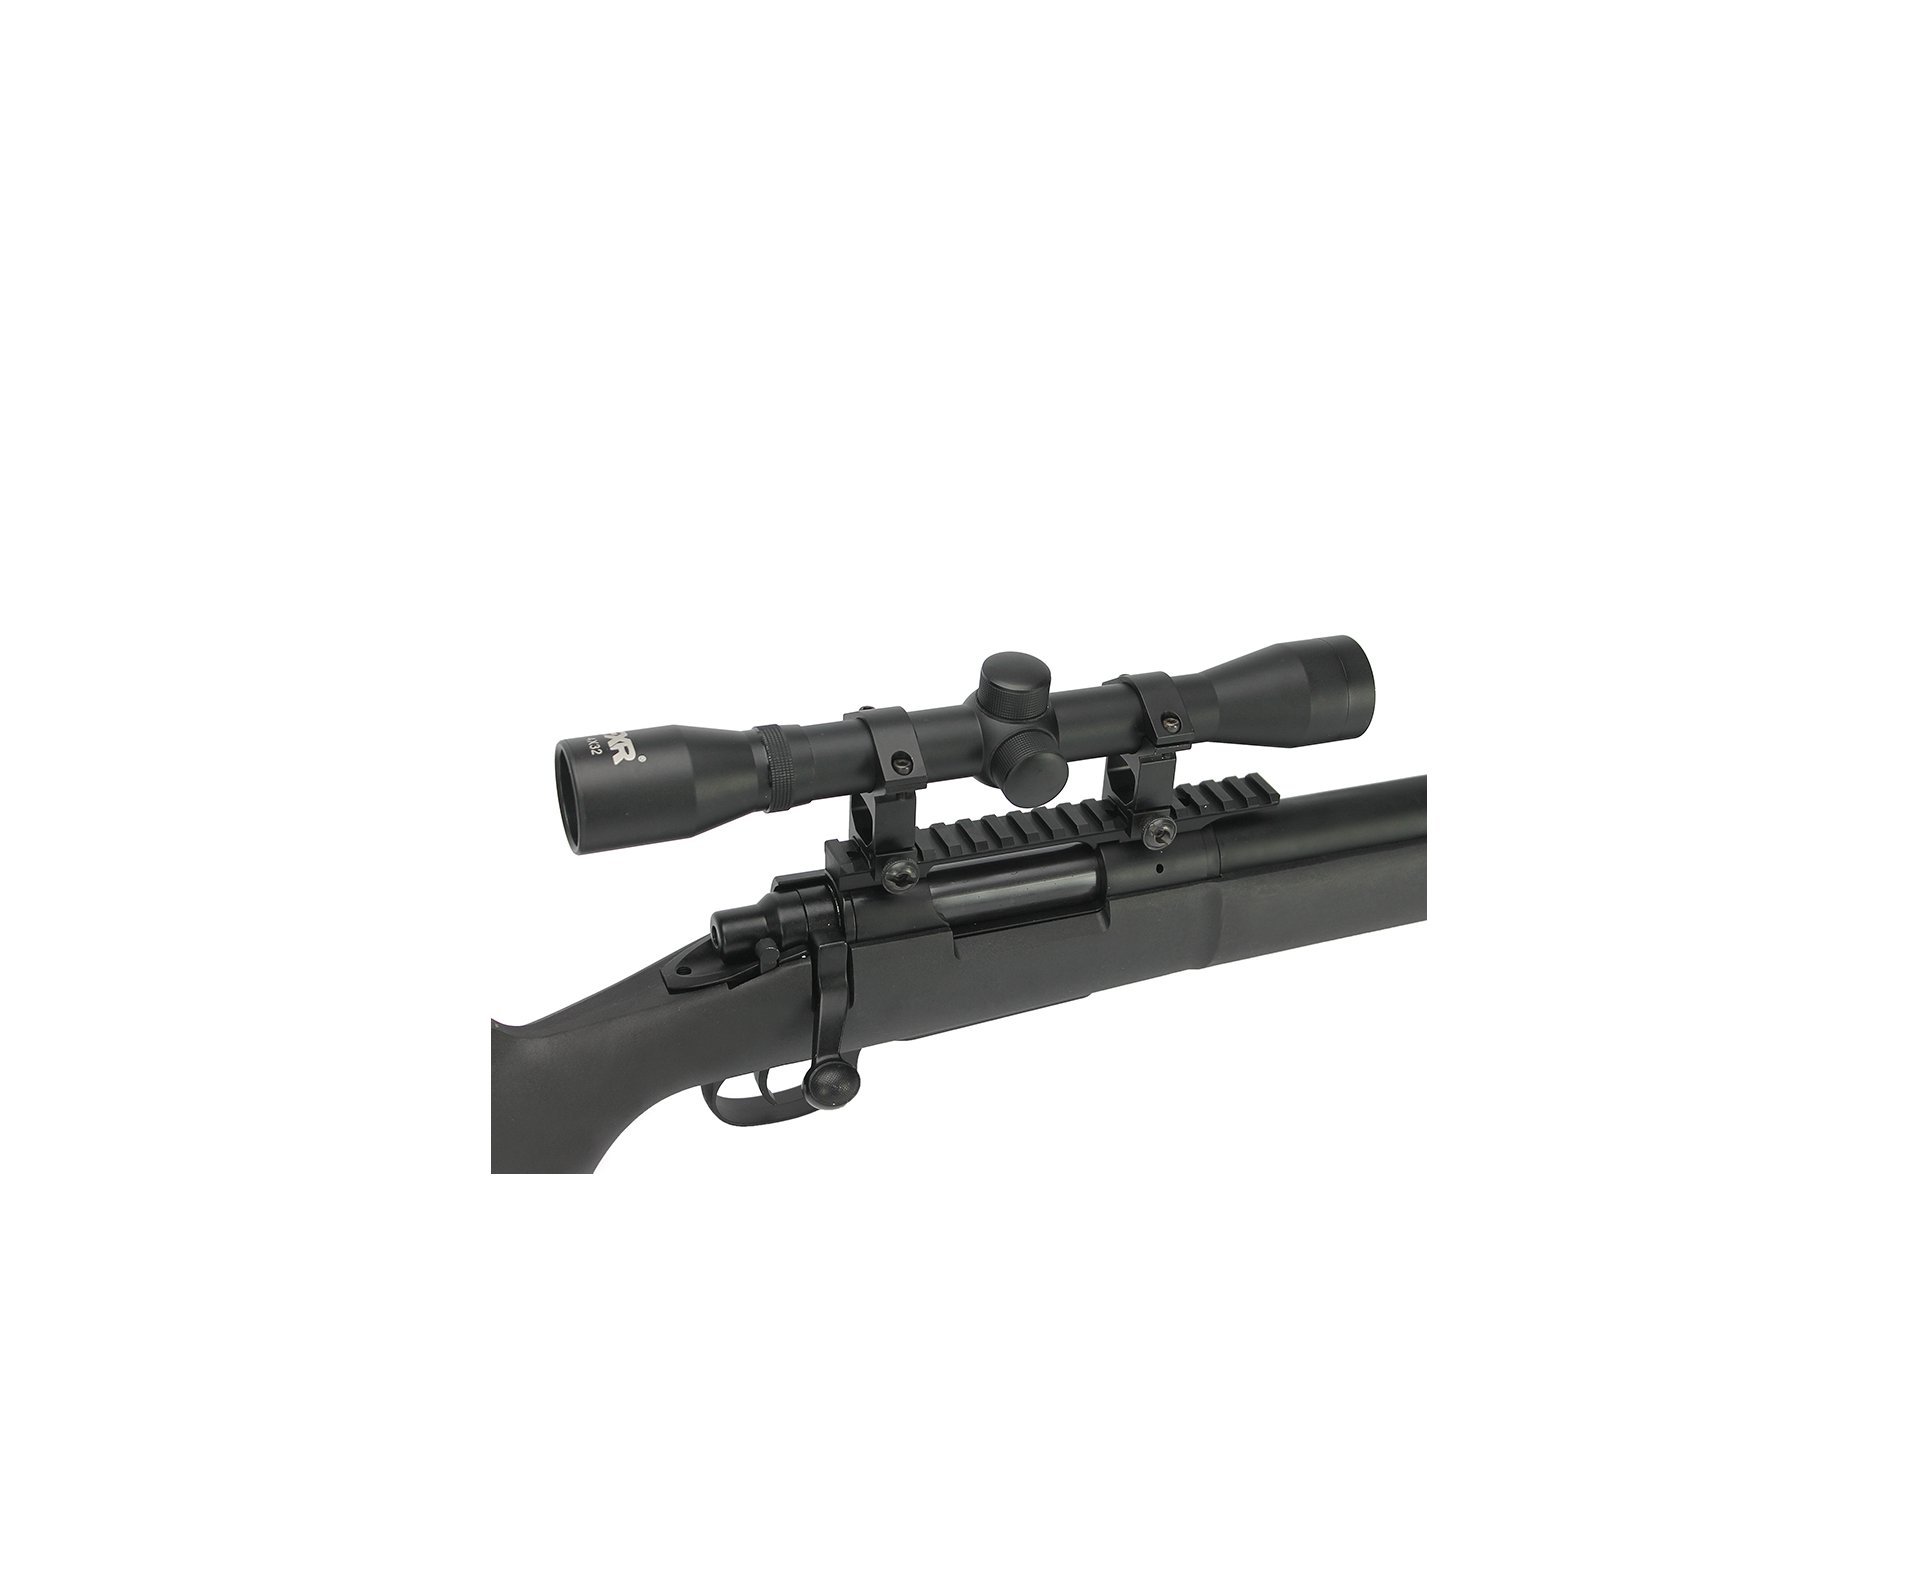 Rifle De Airsoft Sniper M24 Storm Full Metal Vsr10 500fps G2 Spring 6mm - Rossi + Luneta 4x32 + Bbs Raptor Sniper 0,28g 2000uni